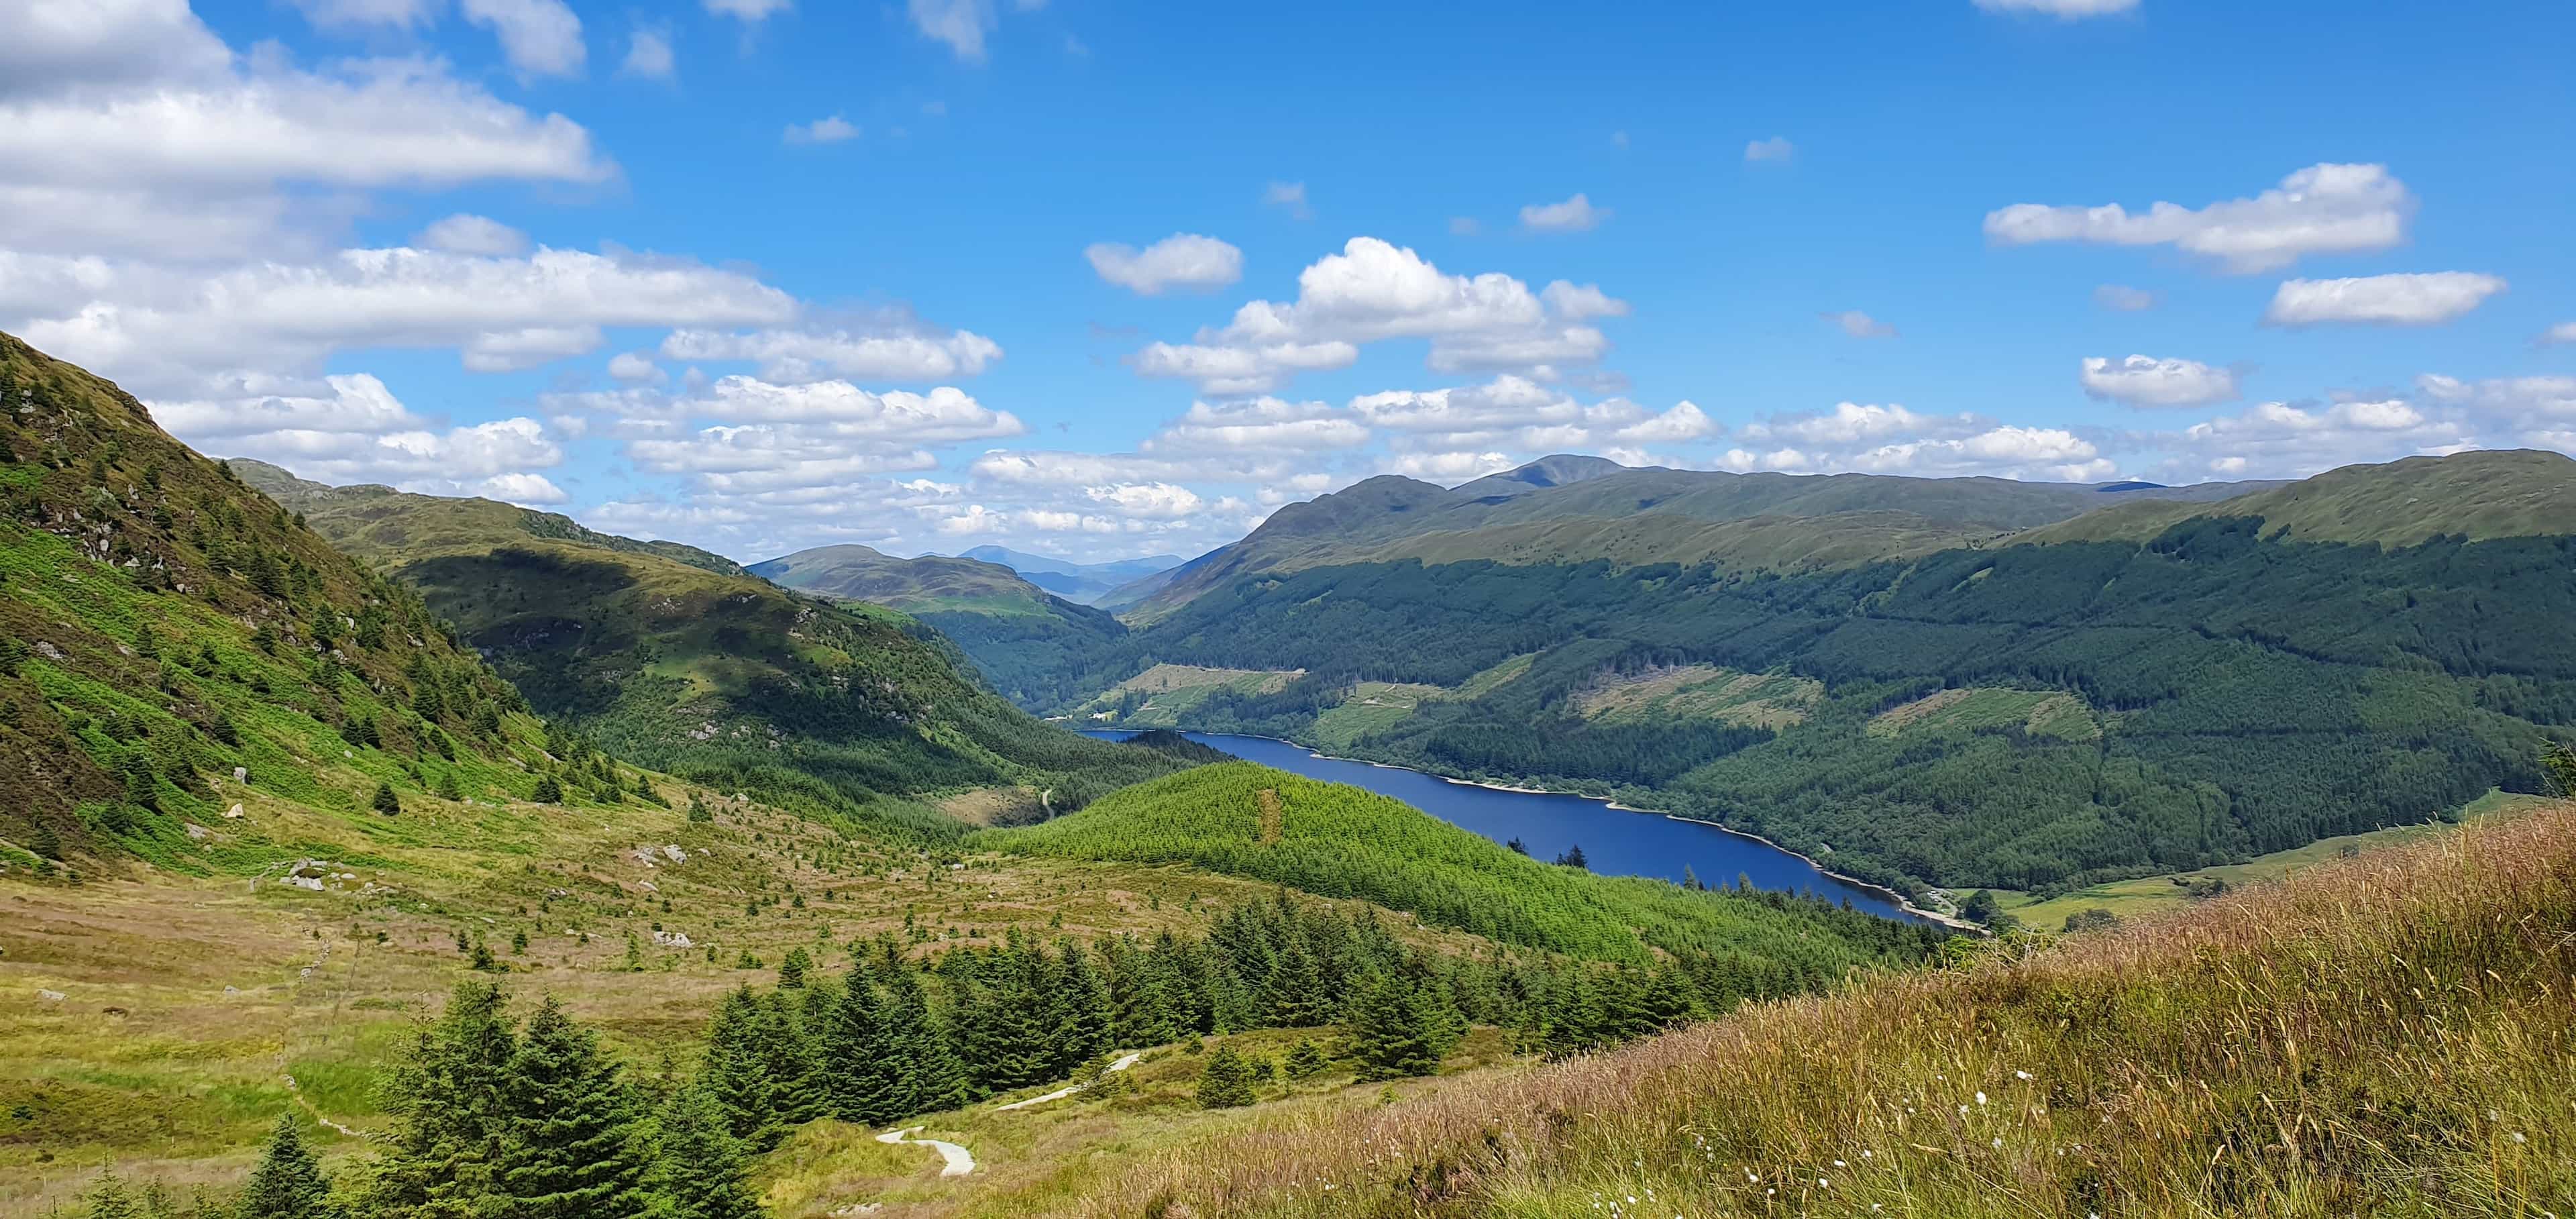 A guide to hiking up Ben Ledi in Scotland